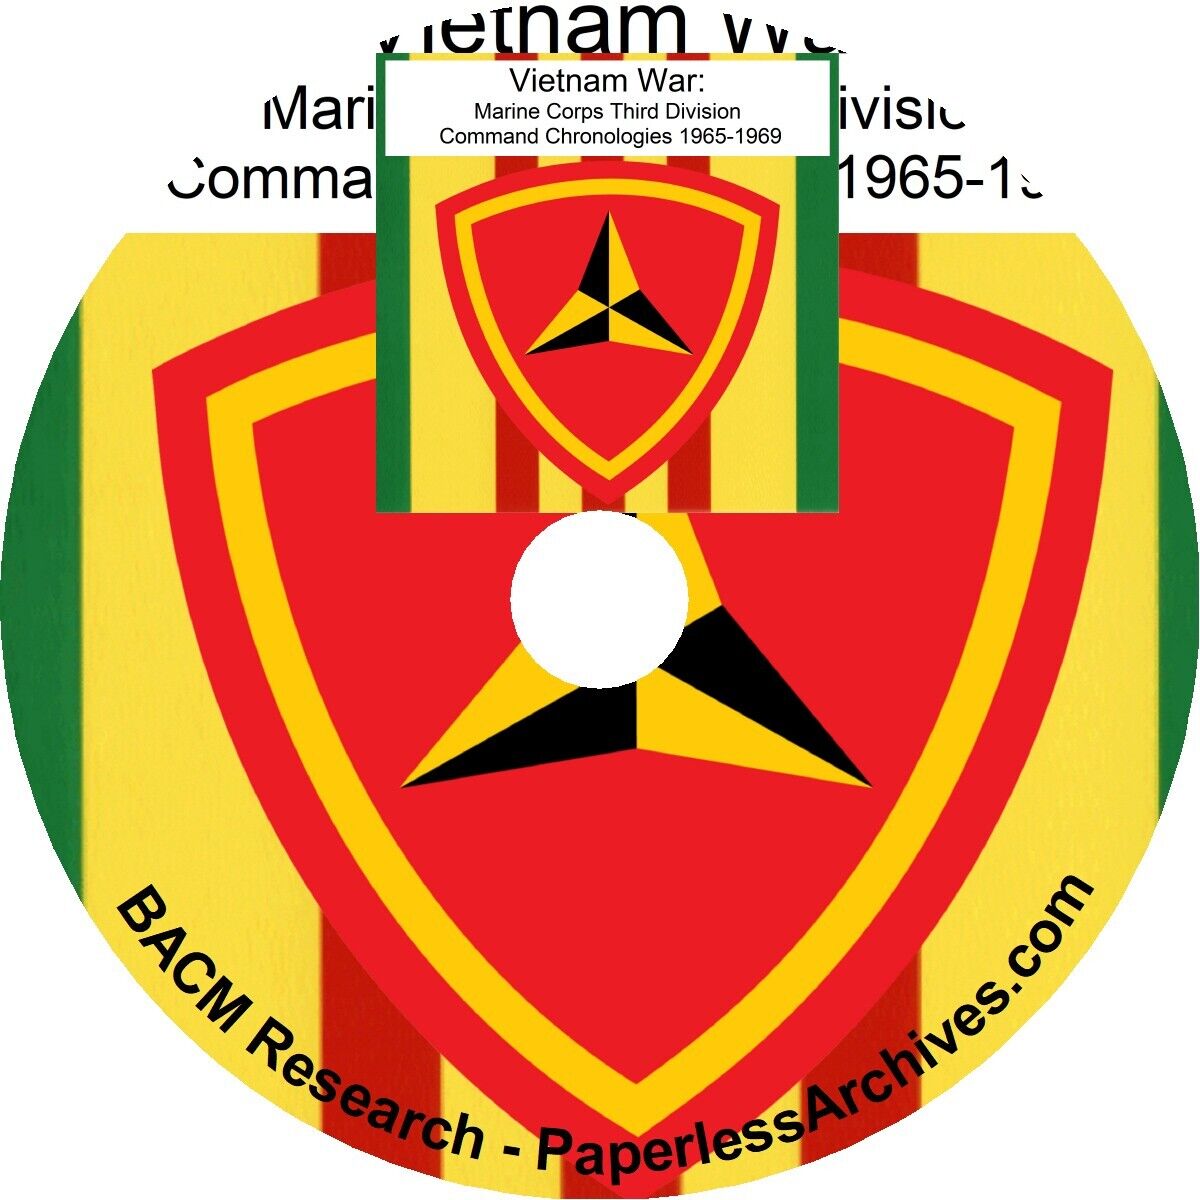 Vietnam War: Marine Corps Third Division Command Chronologies 1965-1969